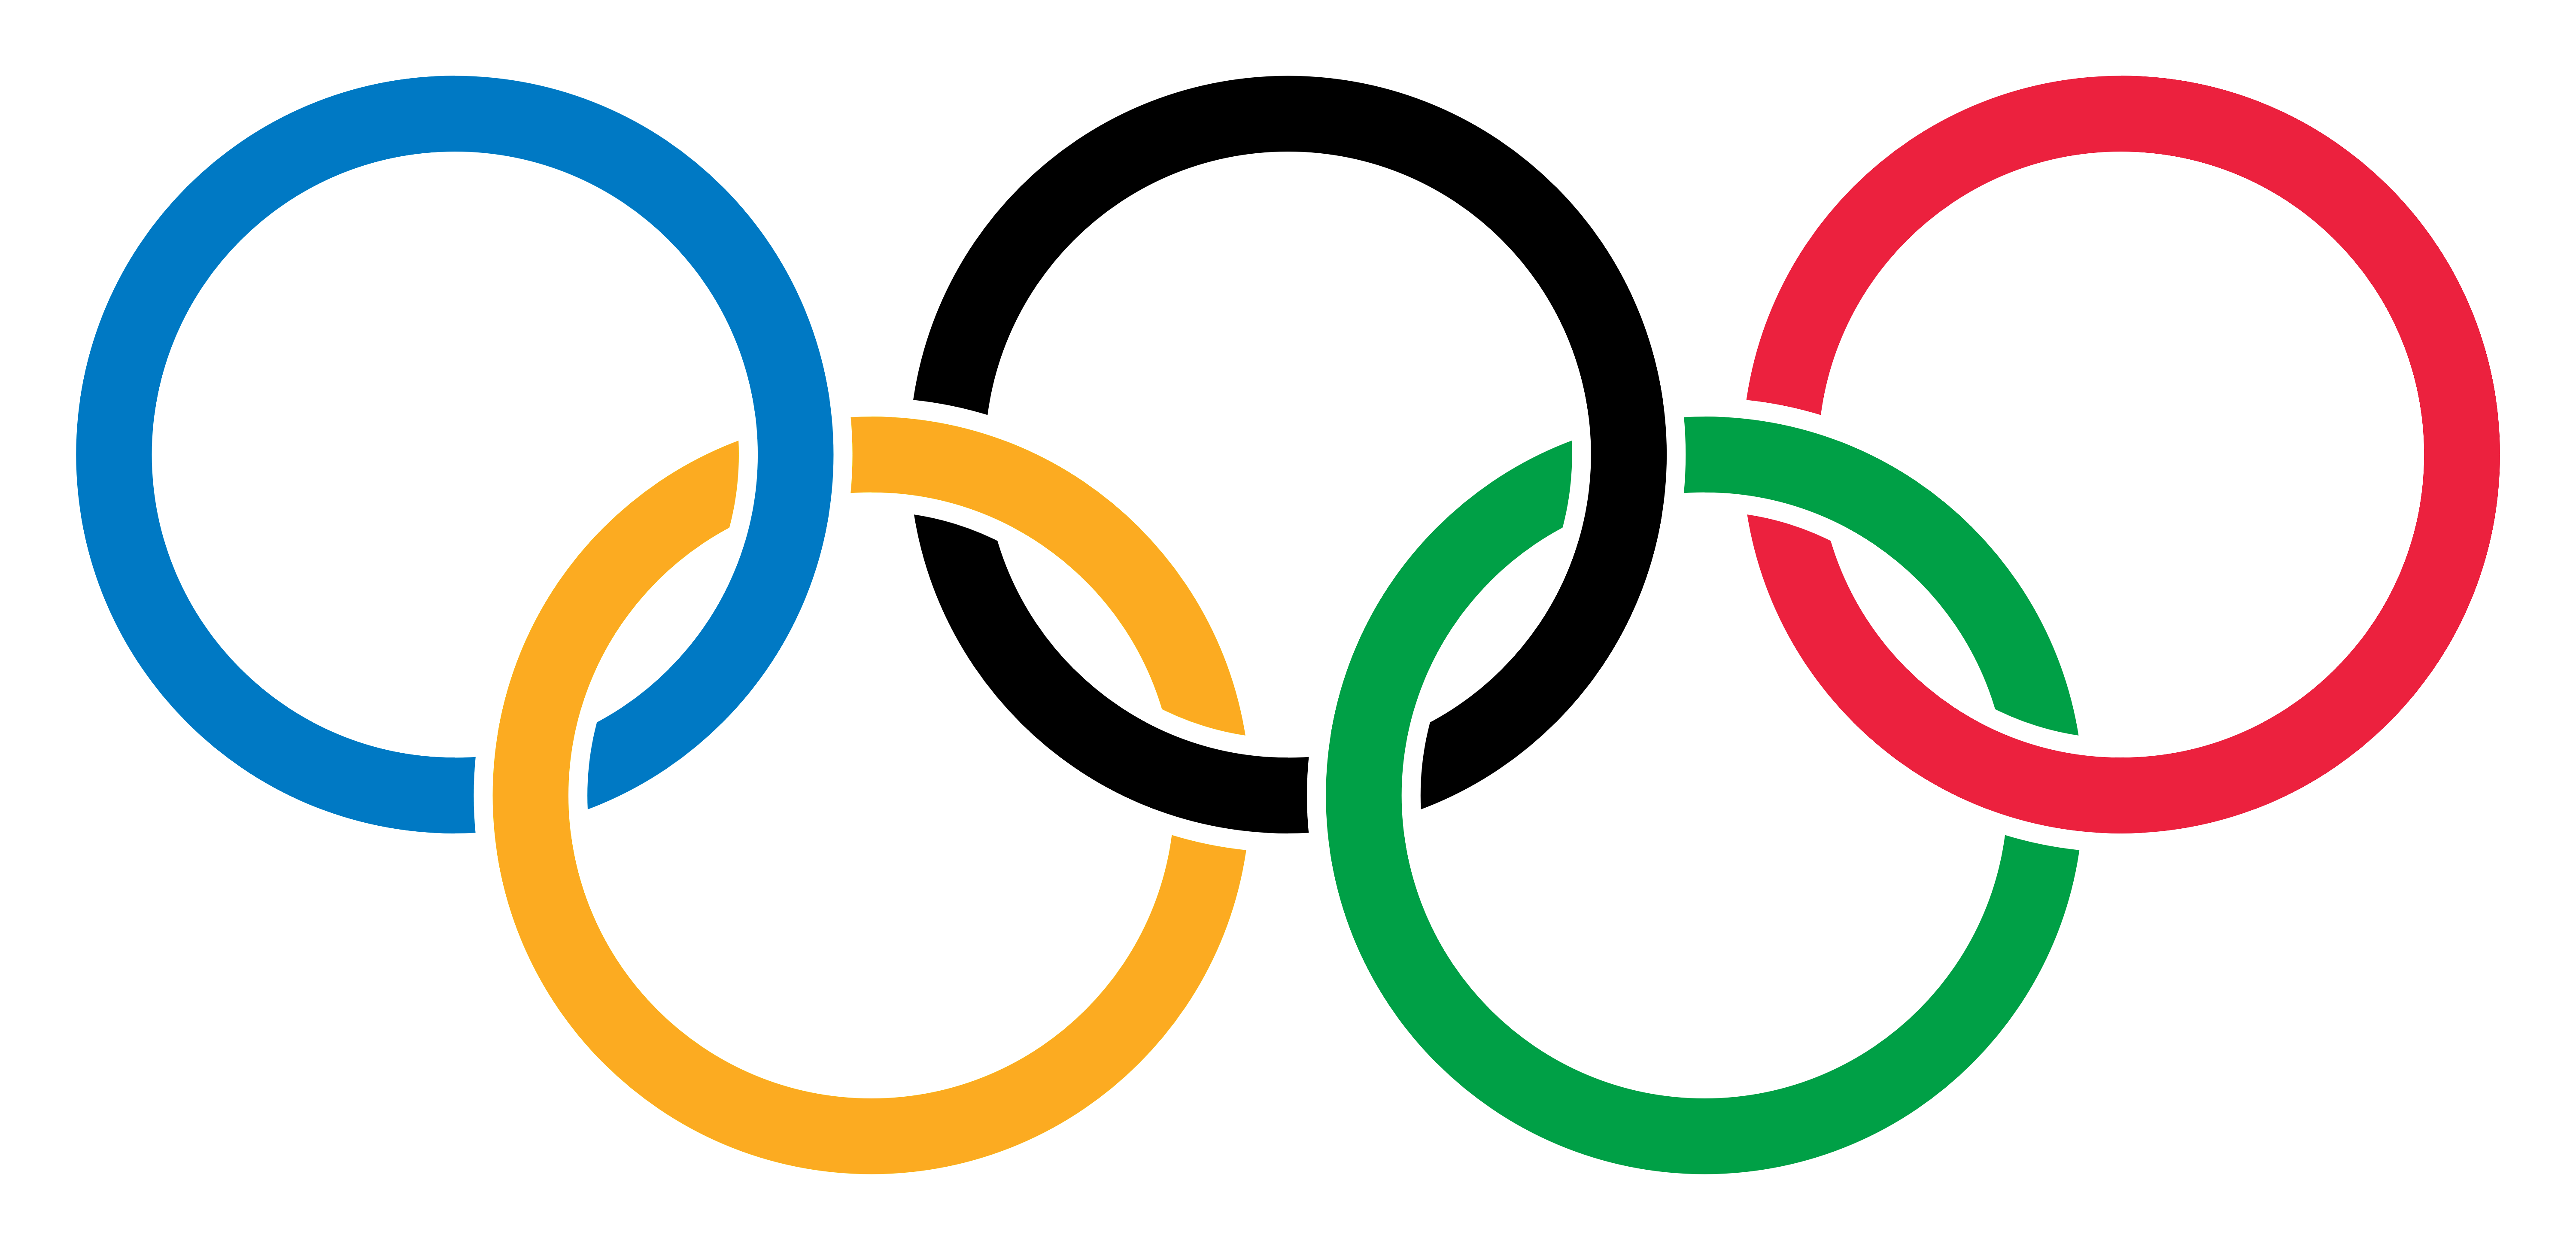 Olympic rings – Logos Download